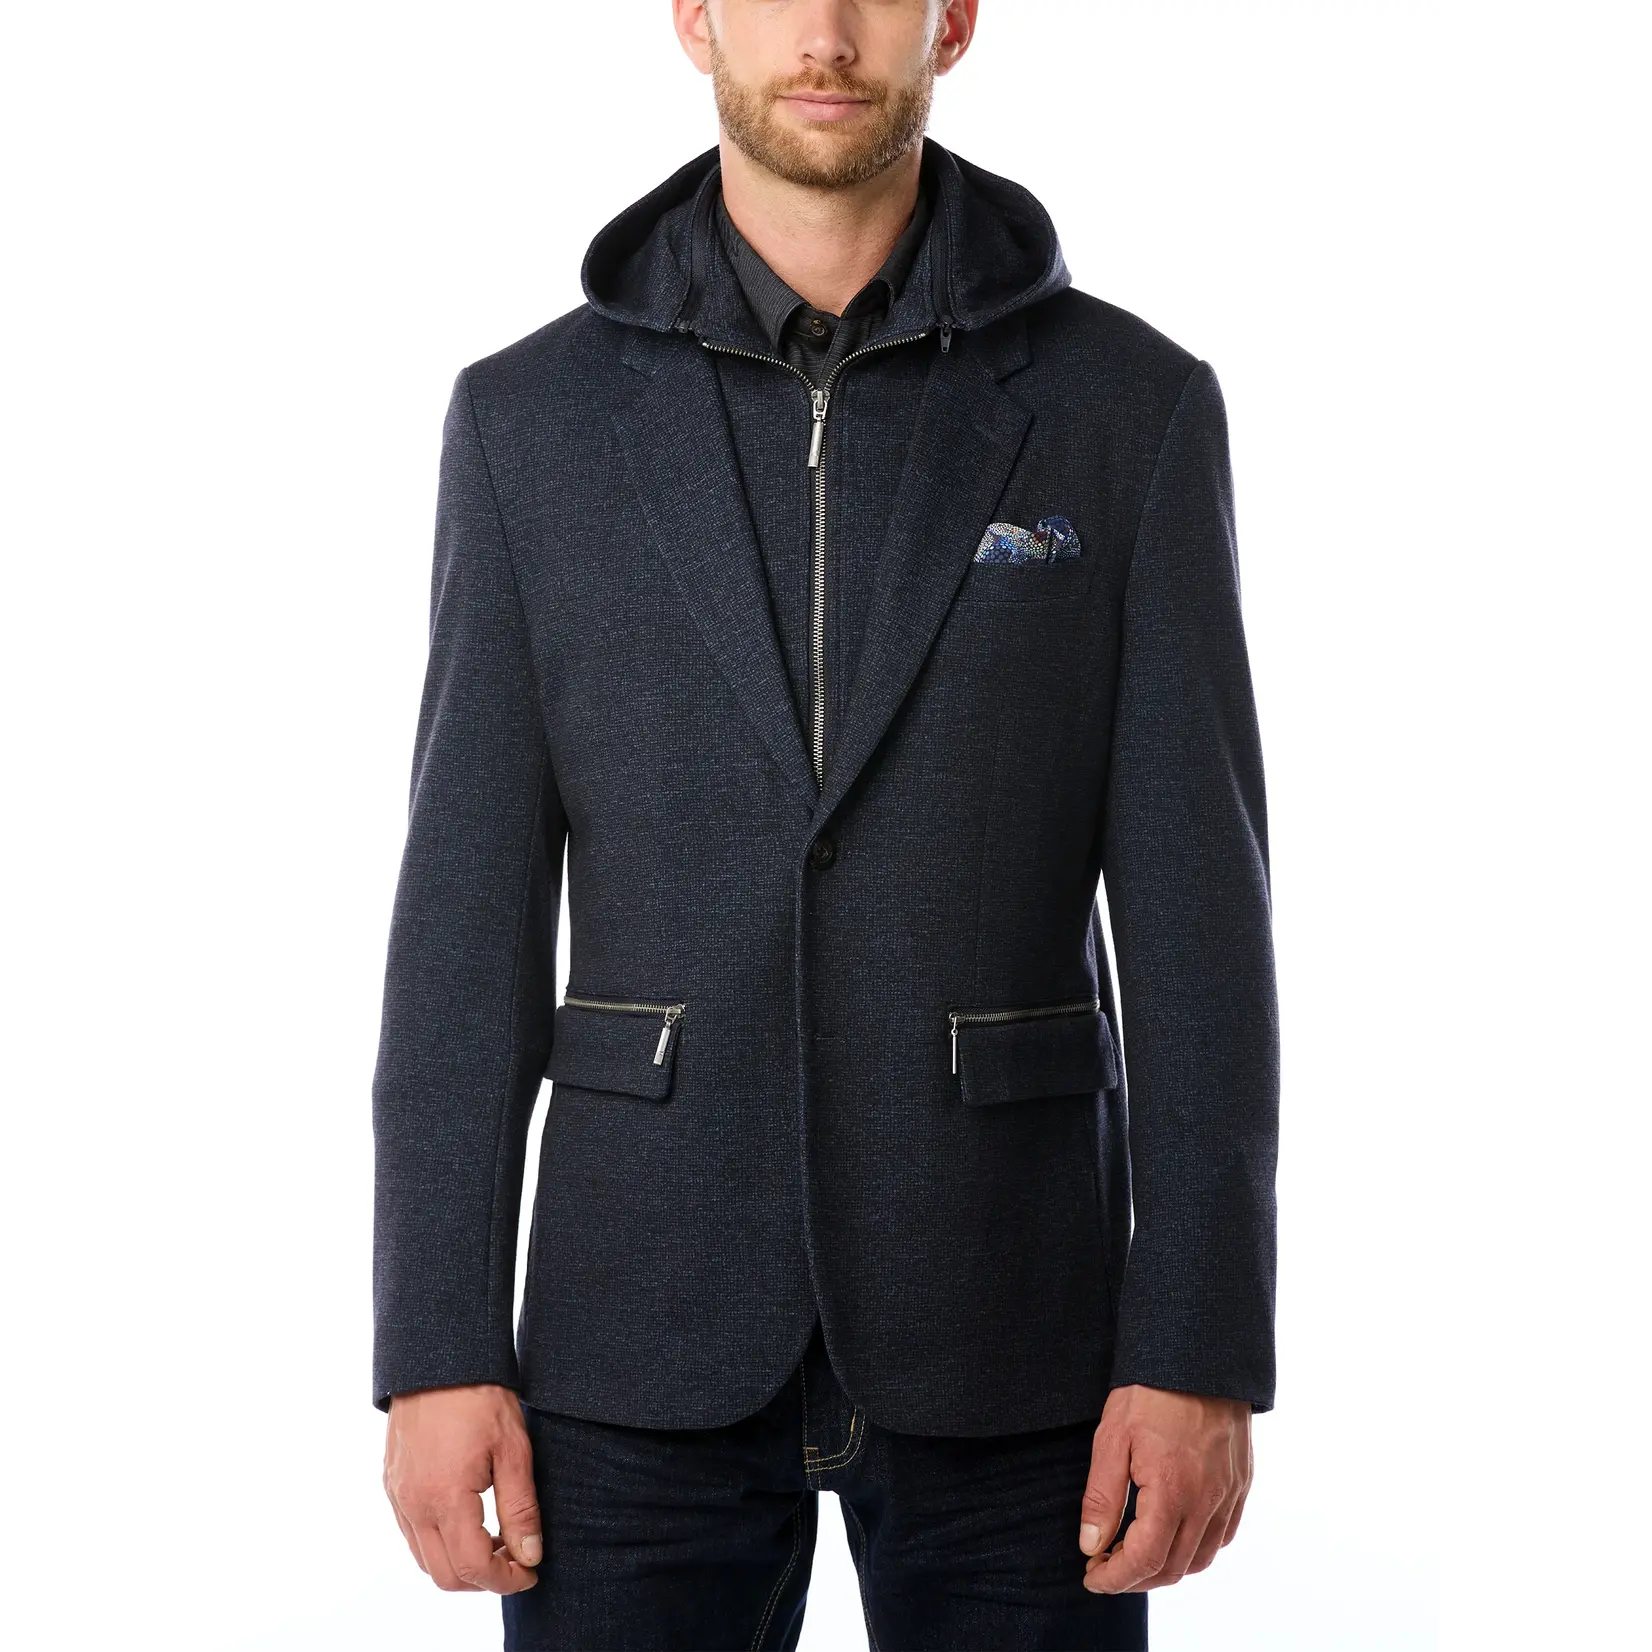 Vincent D'Amerique Vincent D'Amerique mens multi functional blazer/sport coat/dinner jacket, dress coat with zip off collar and hood